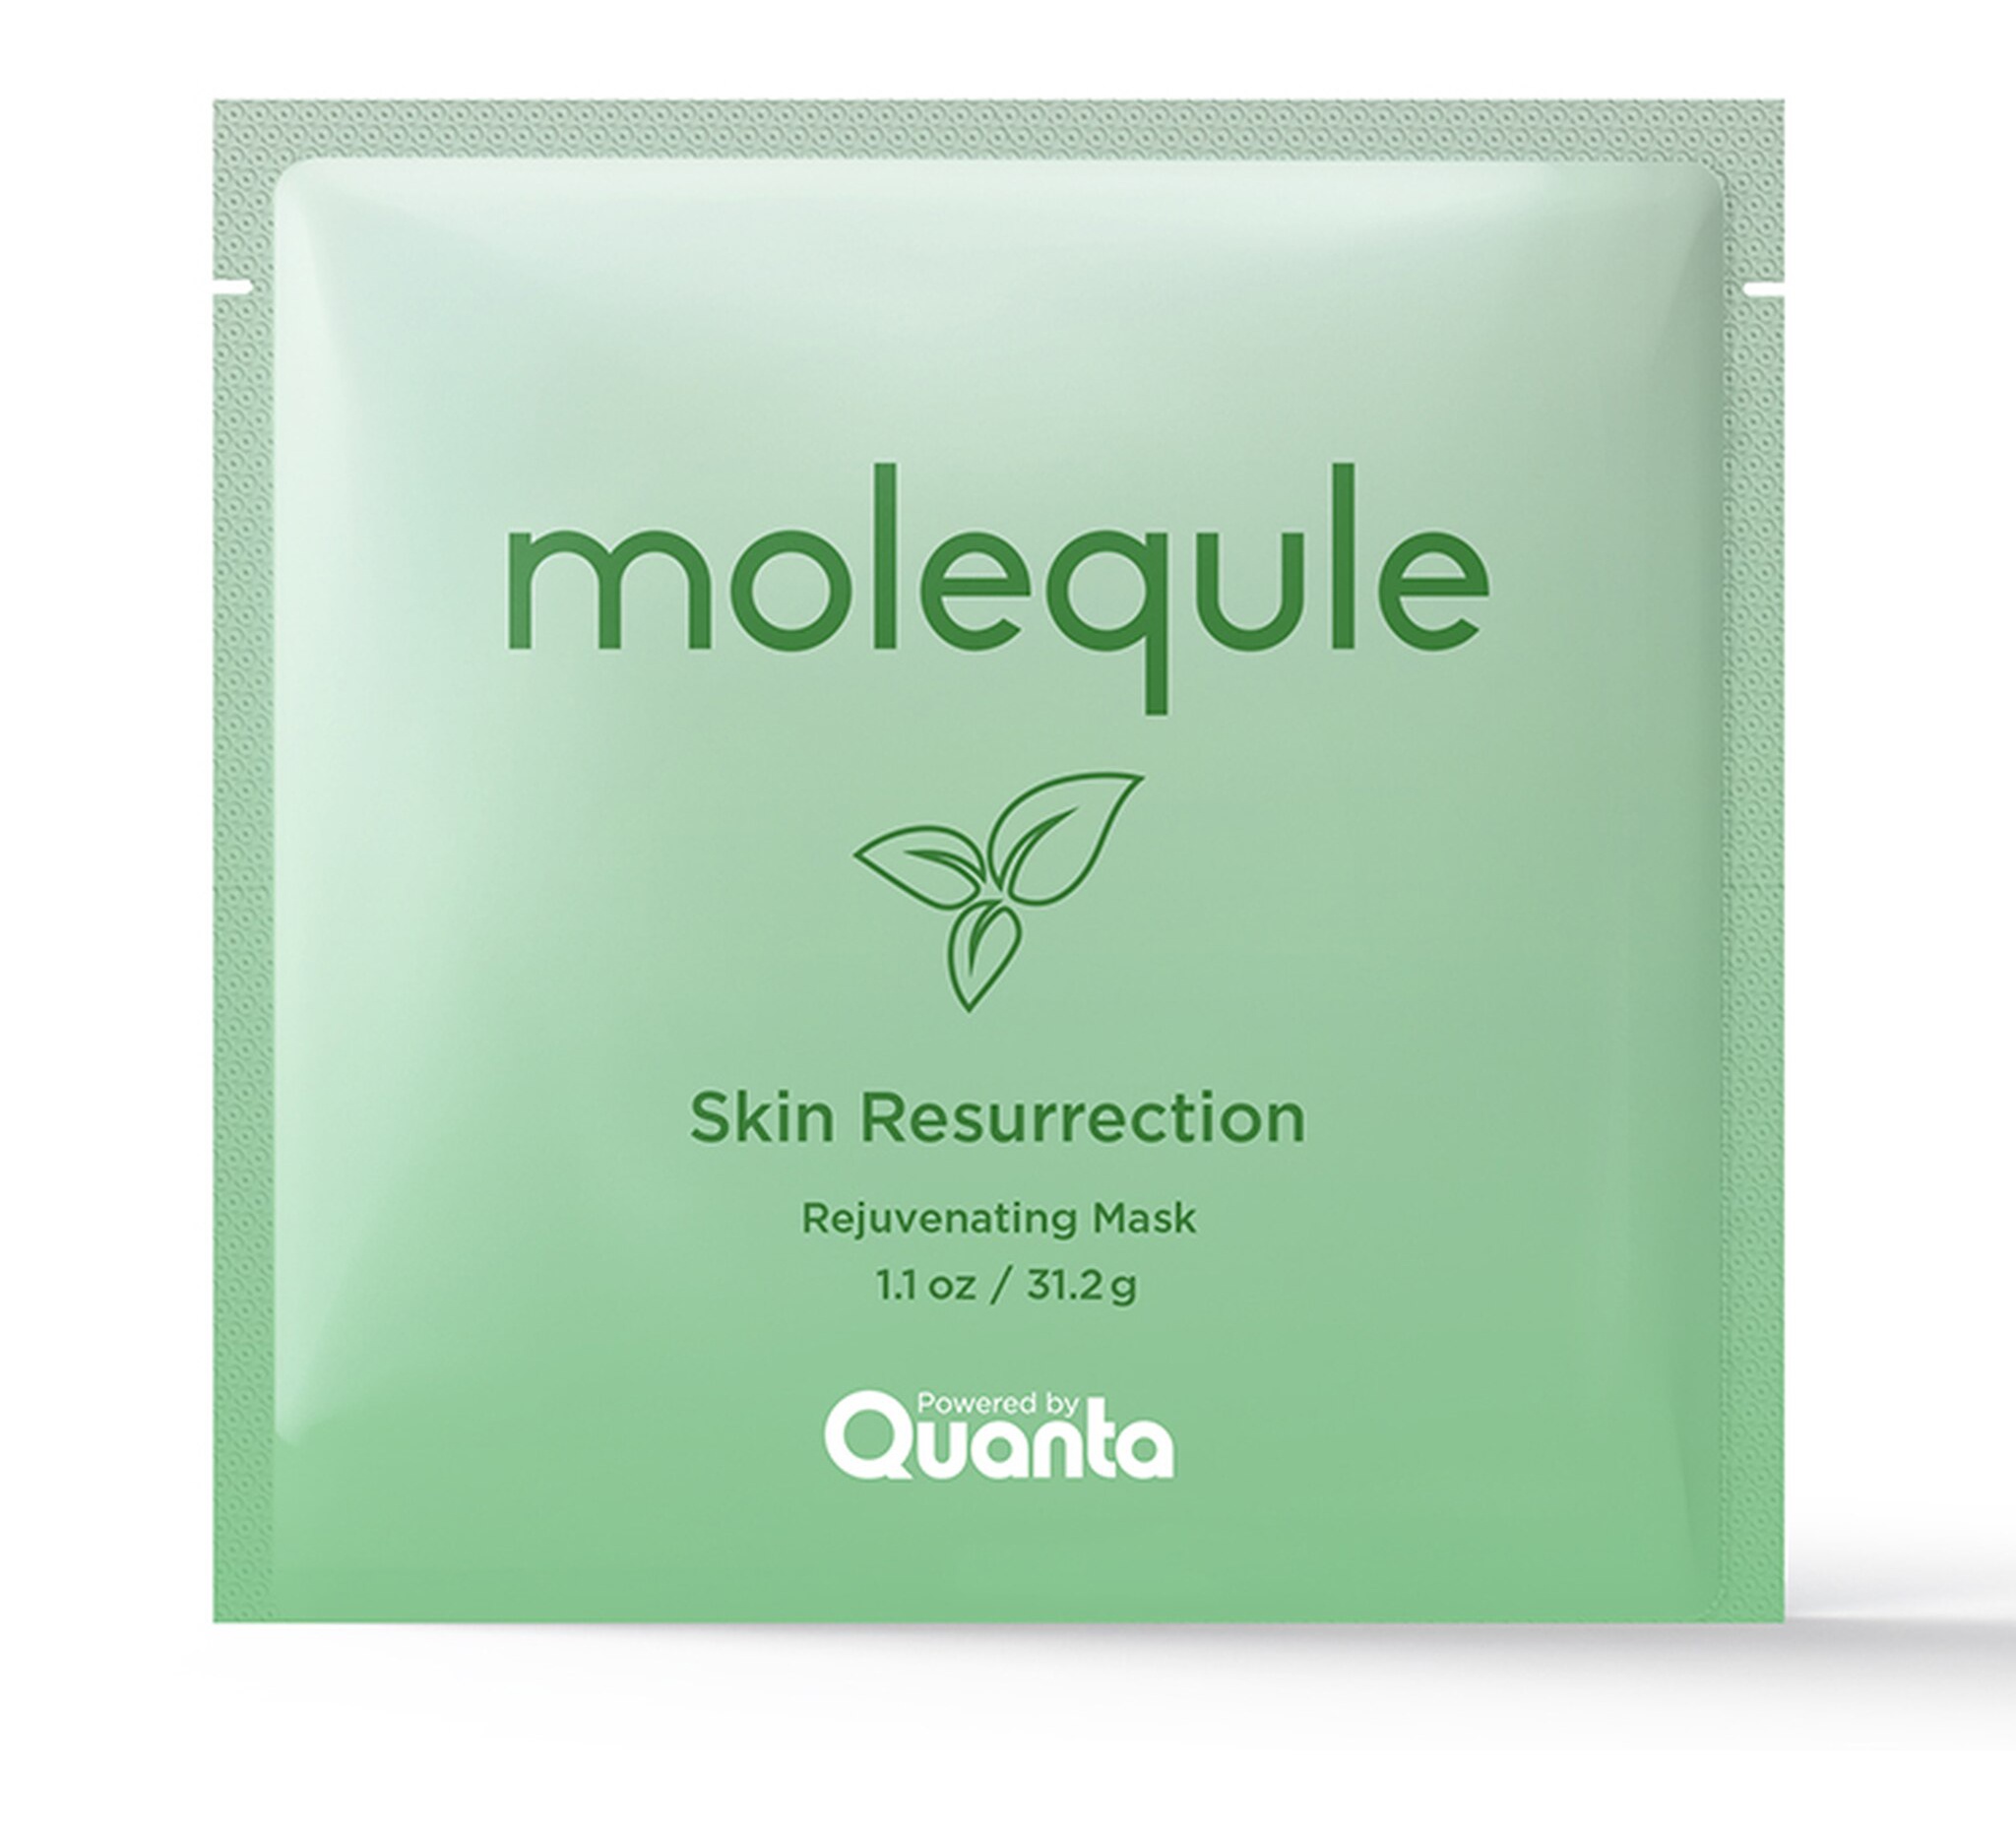 Molequle Skin Resurrection Rejuvenating Mask